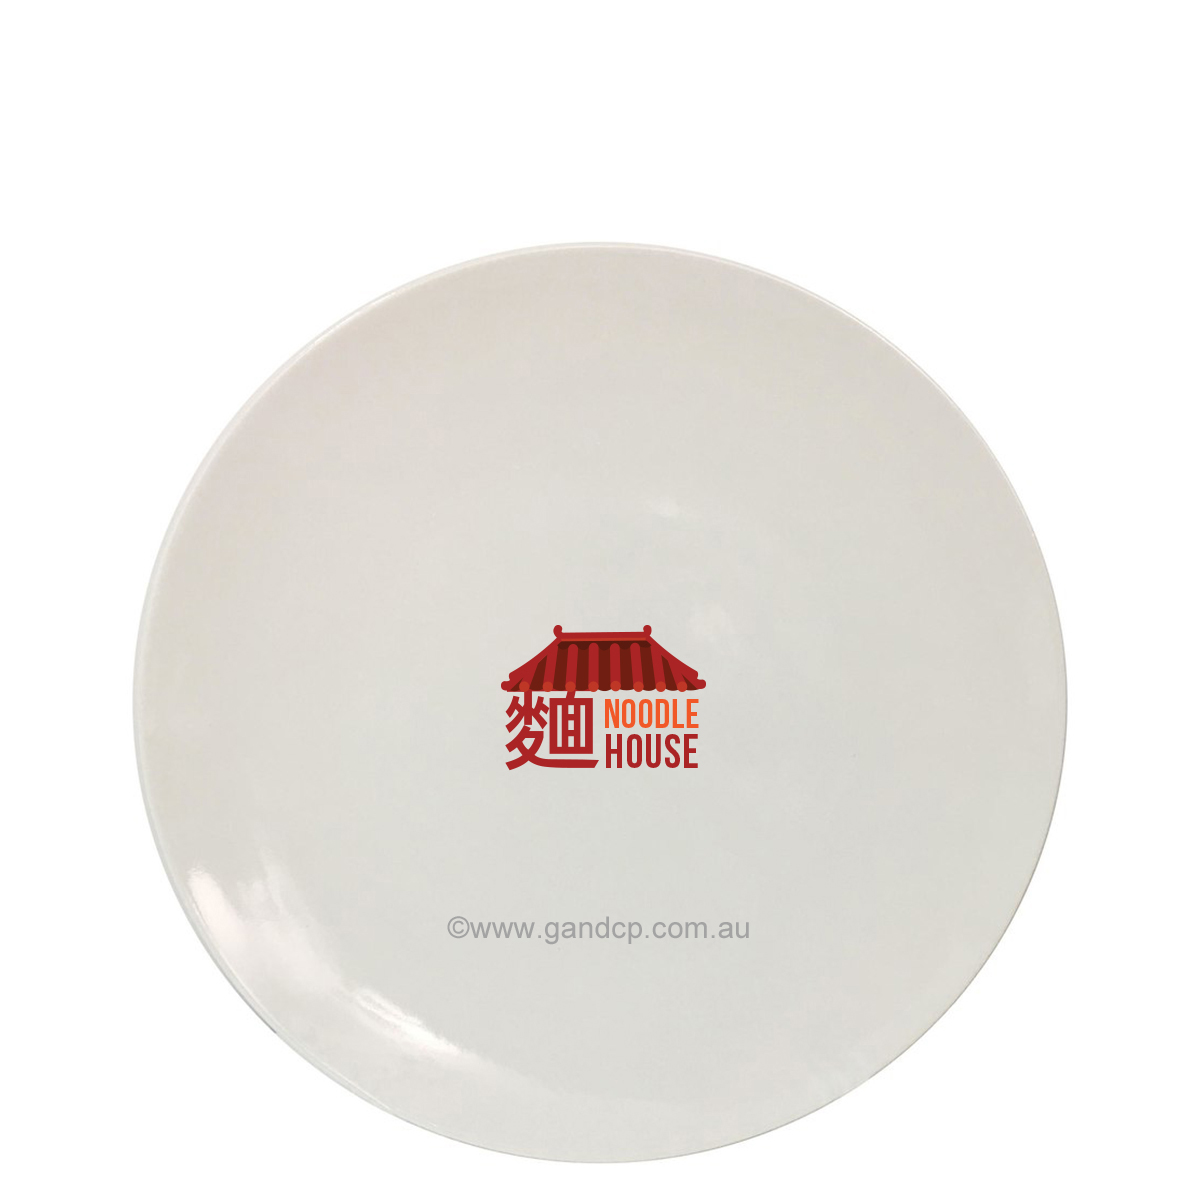 Ceramic Plate Printing